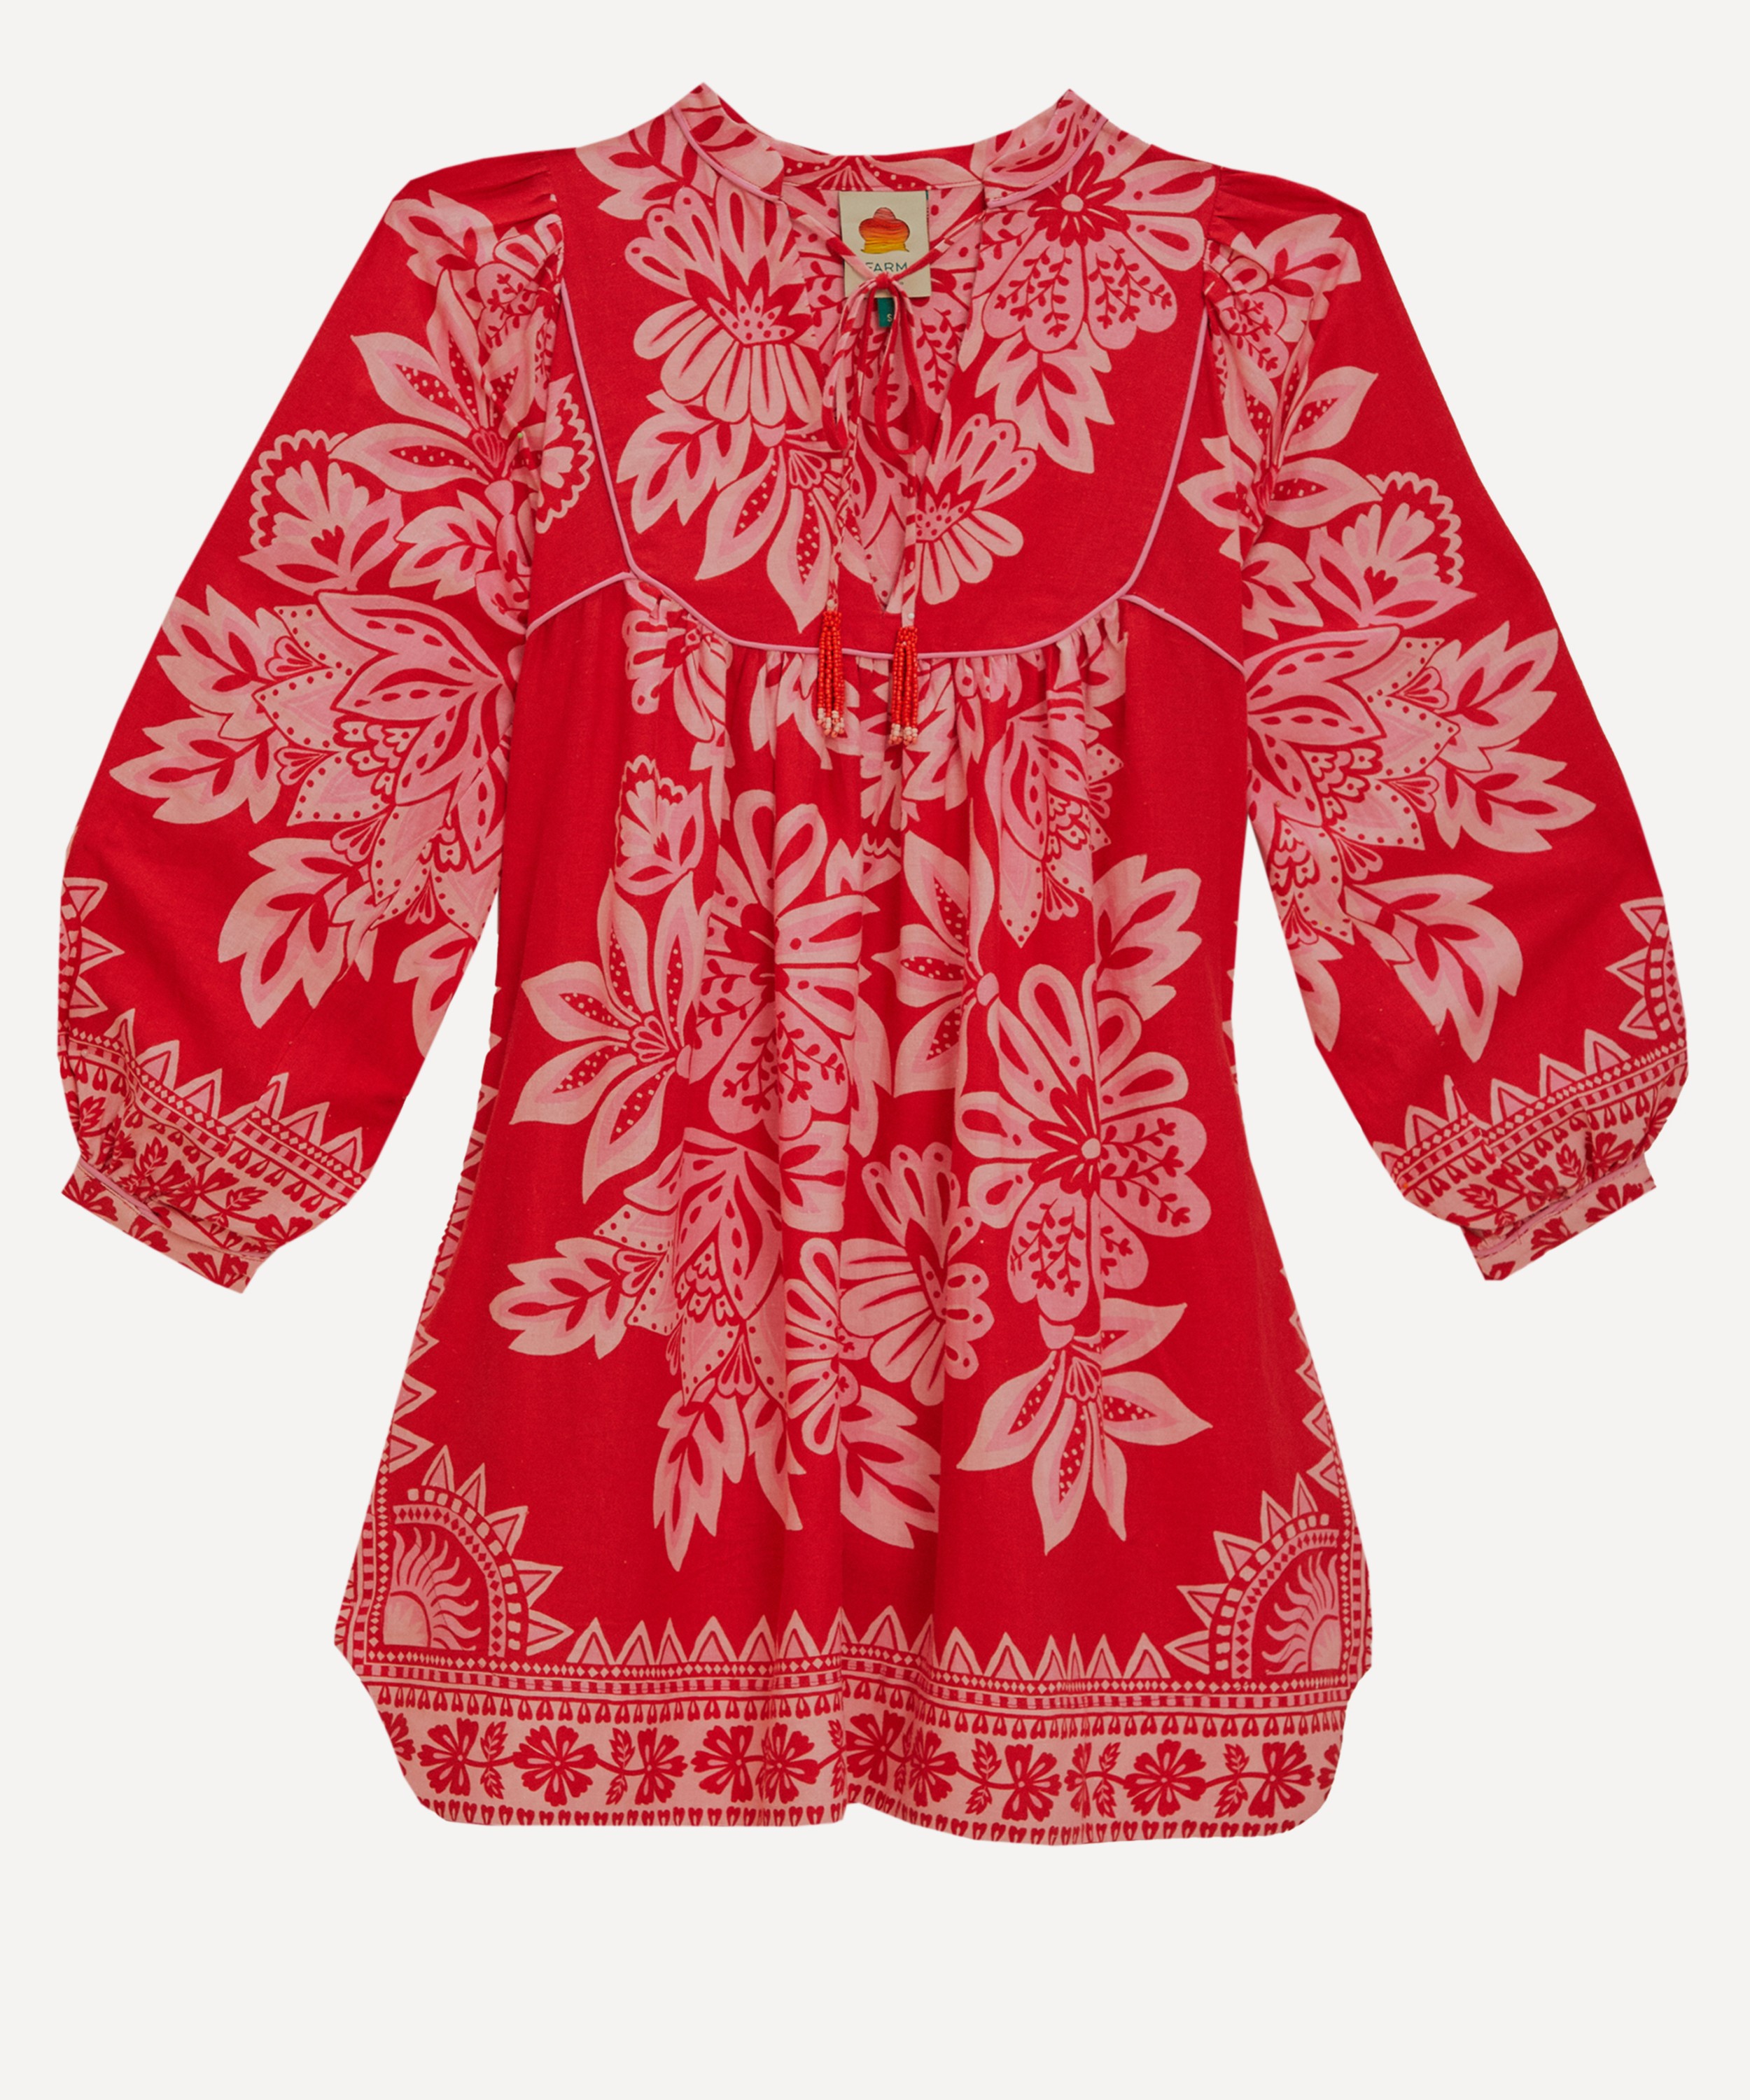 FARM Rio - Flora Tapestry Tapestry Red Mini-Dress